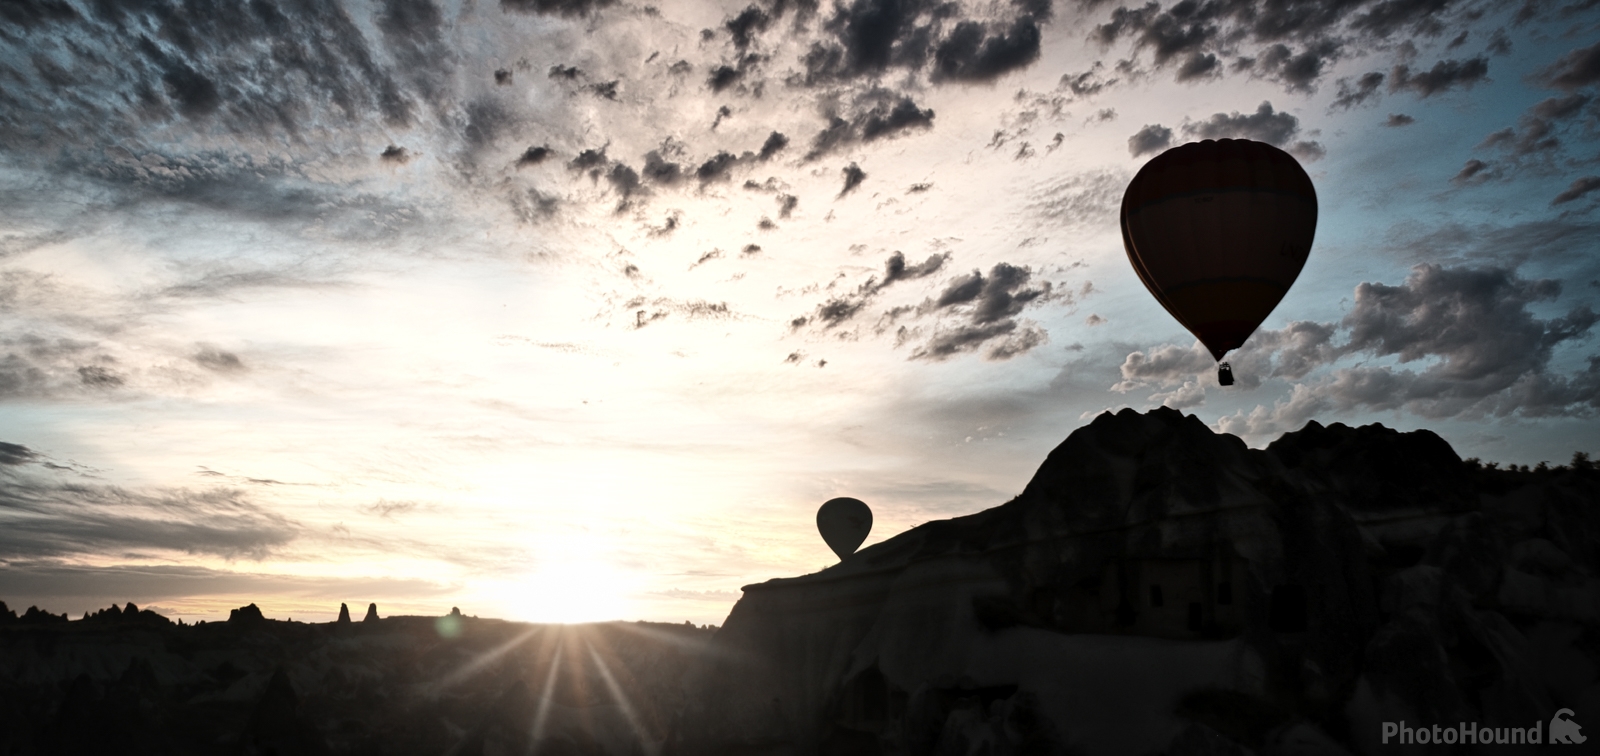 Image of Cappadocia Hot Air Ballooning by Martin Heaps